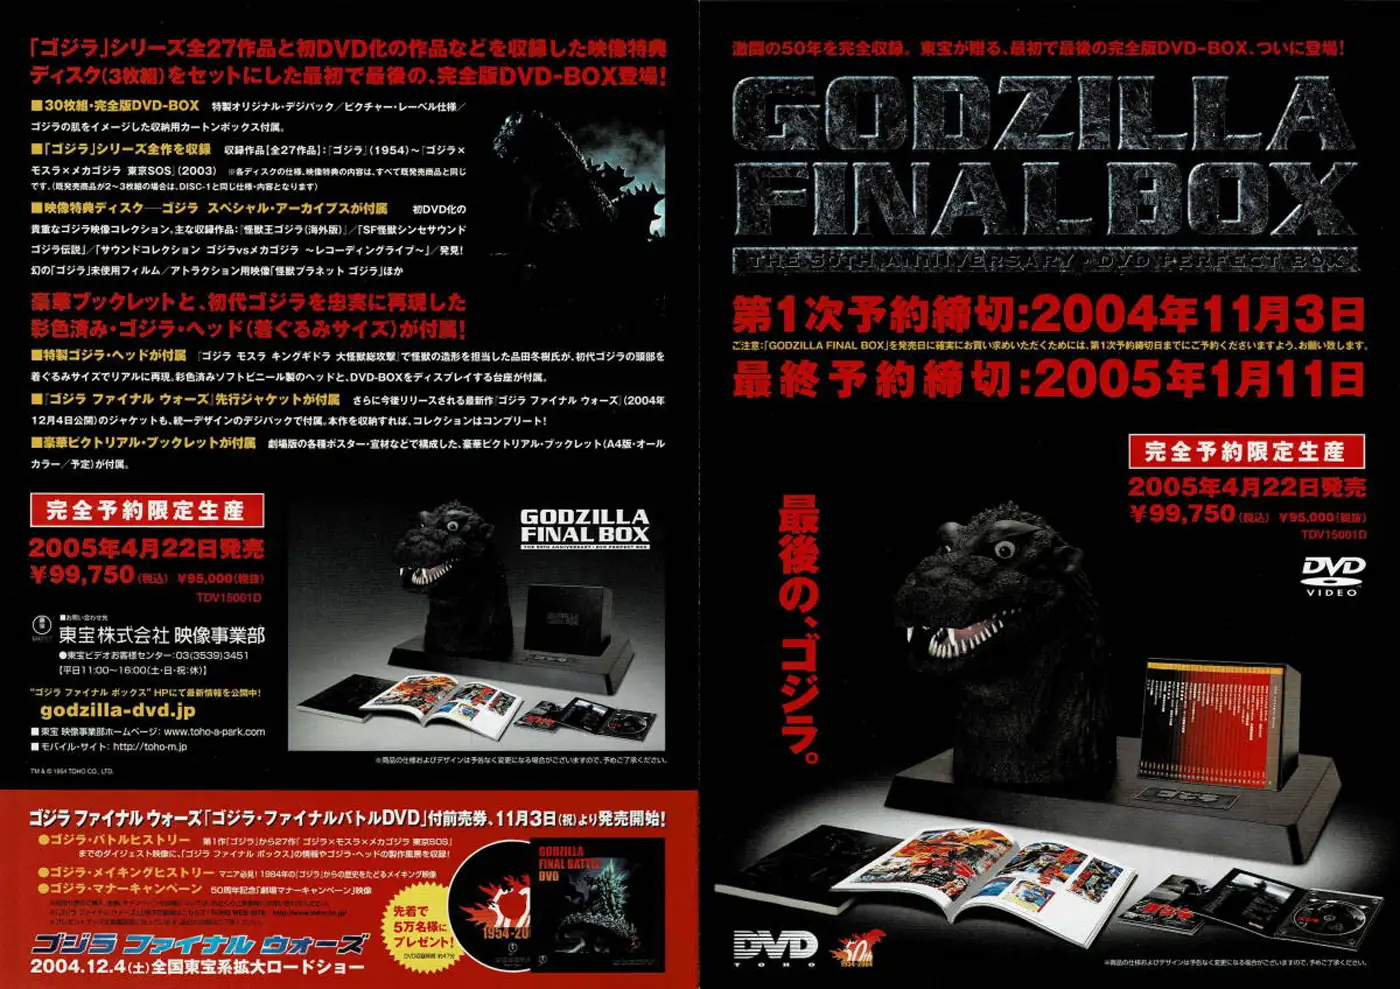 GODZILLA FINAL BOX: The 50th Anniversary DVD Perfect Box /『ゴジラ』生誕50周年記念DVD30枚組BOX Ad